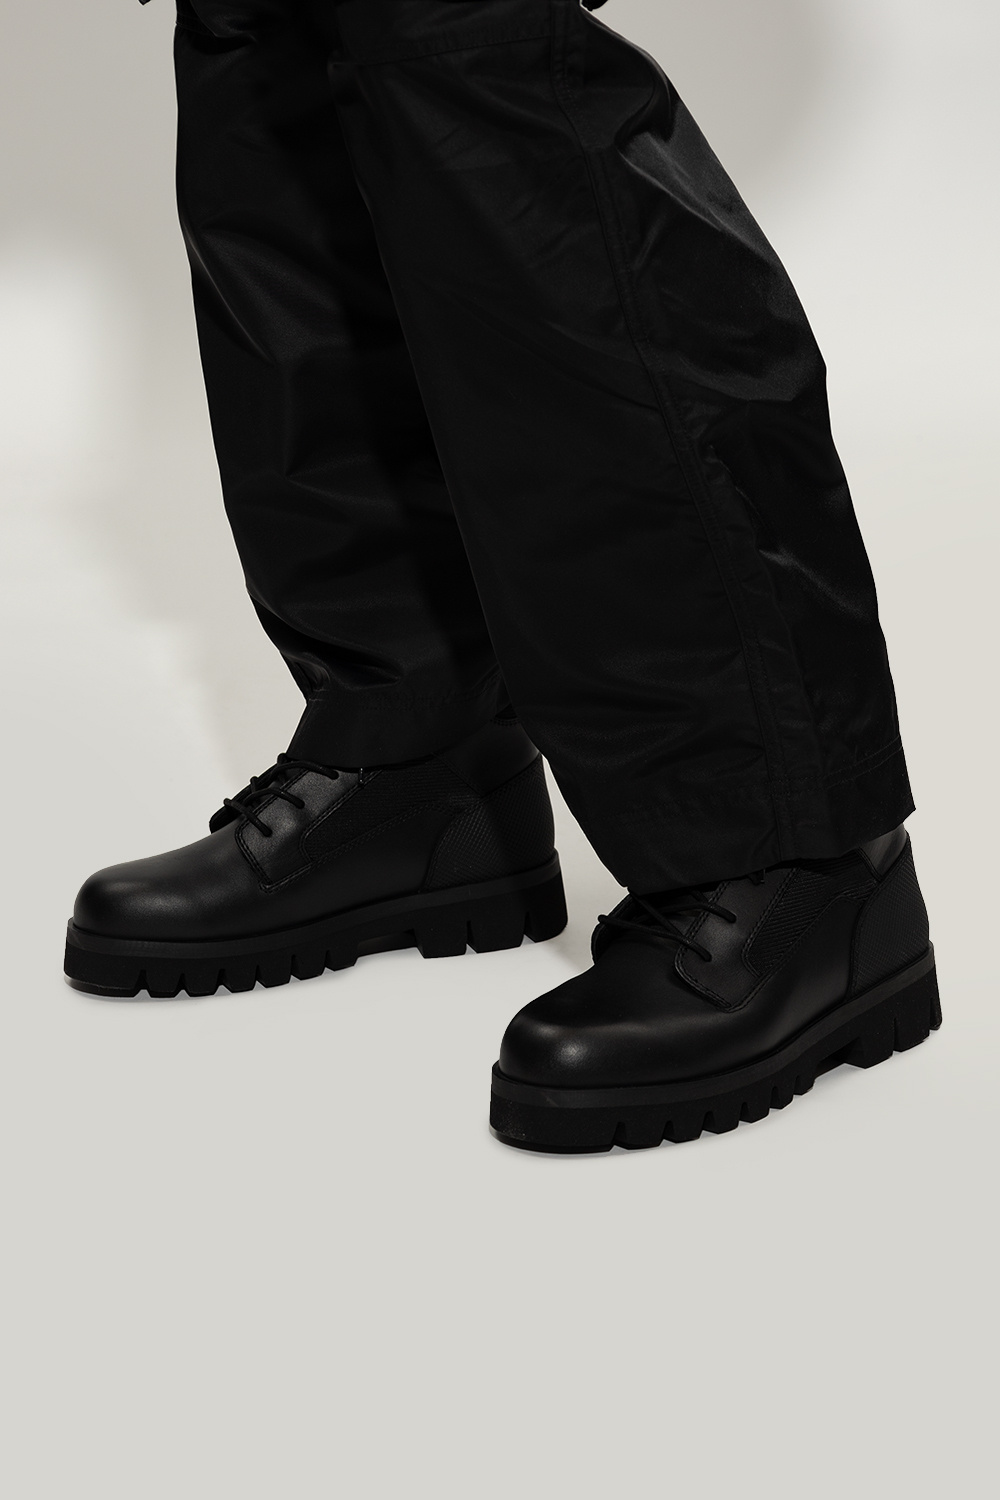 Heron Preston Giuseppe Zanotti colour-block low-top leather sneakers